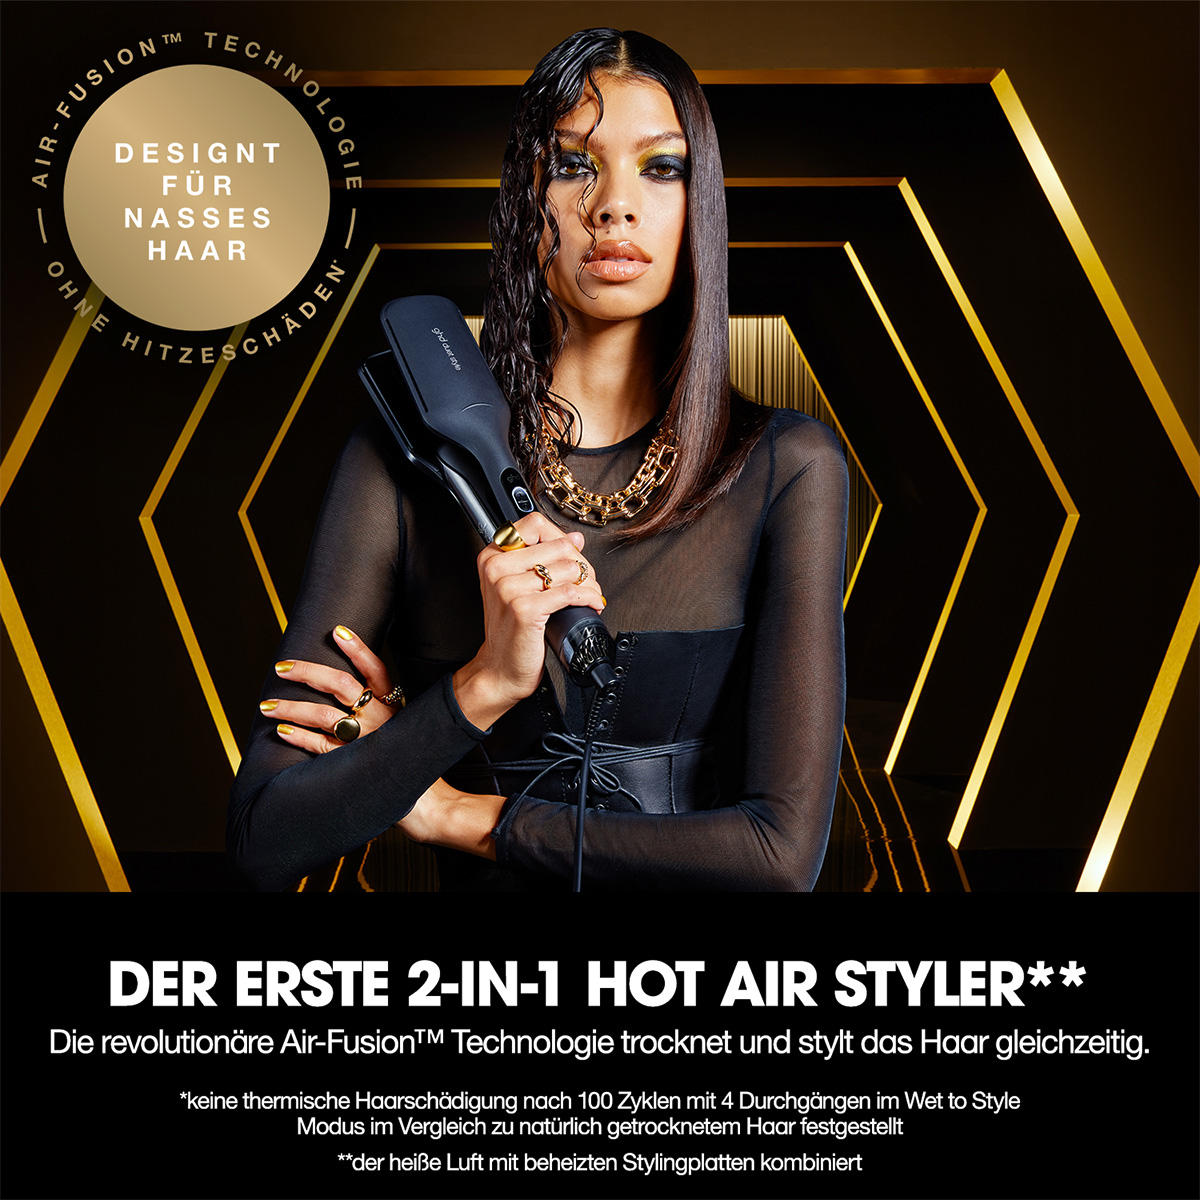 ghd Hot Air Styler duet style 2-in-1 weiß - 4